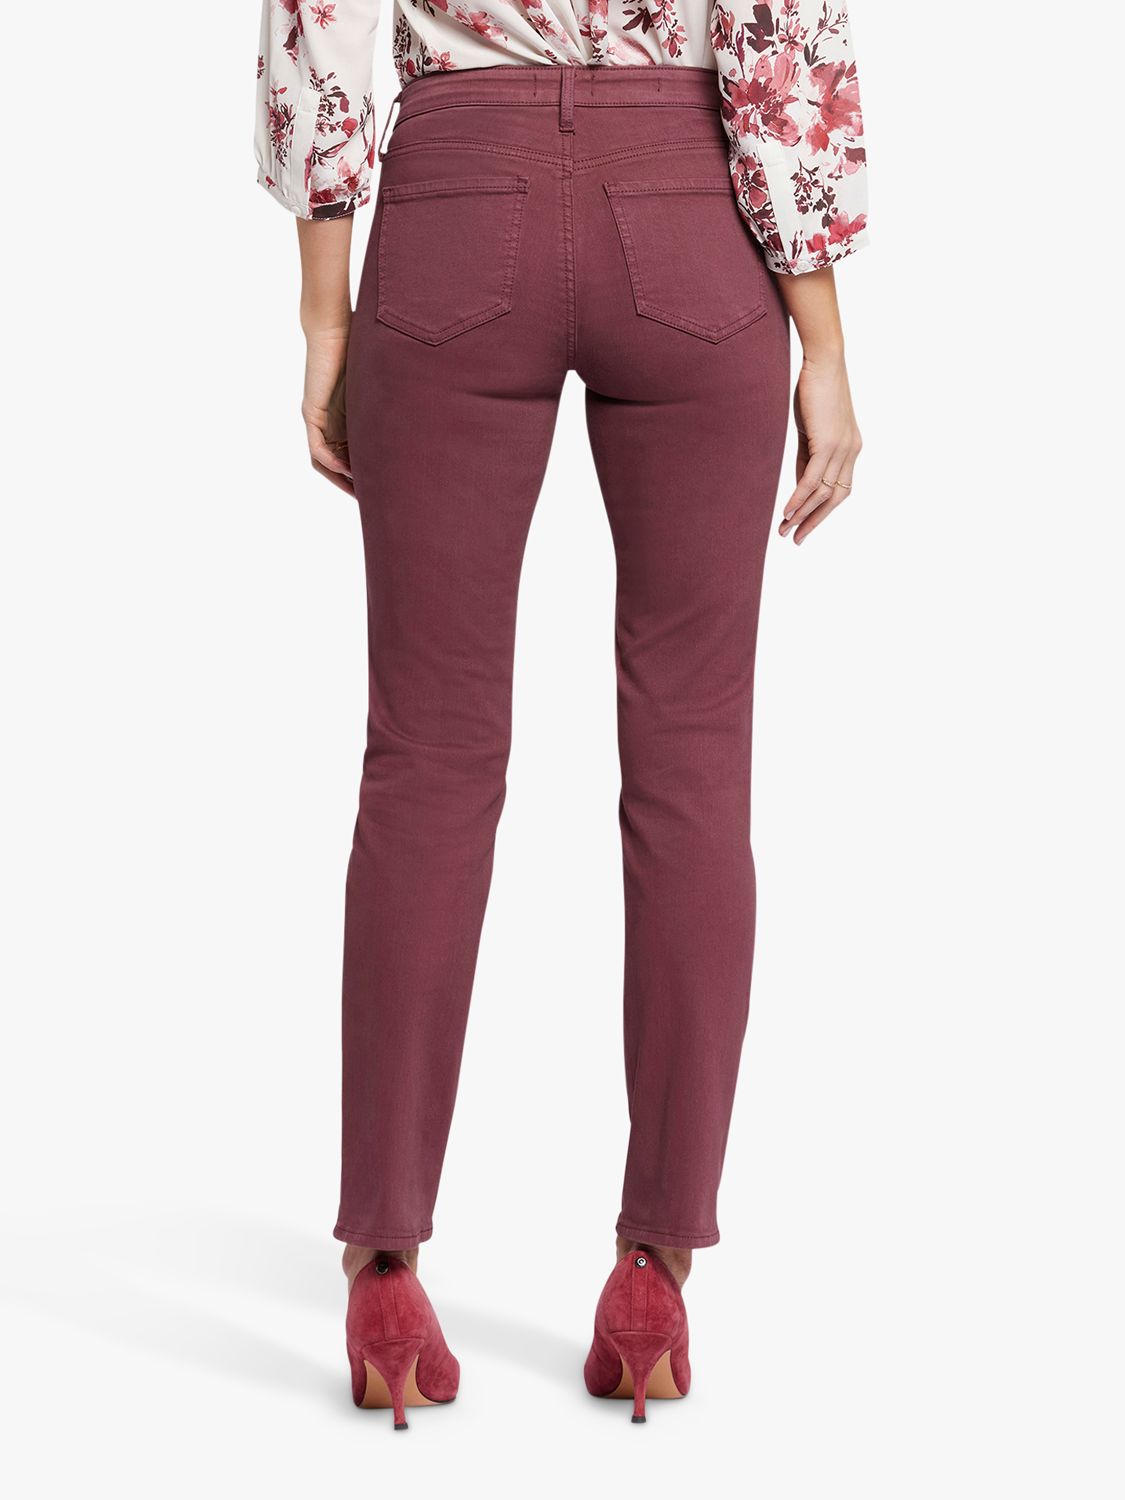 NYDJ Sheri Slim Ankle Length Jeans, Dark Cherry at John Lewis & Partners